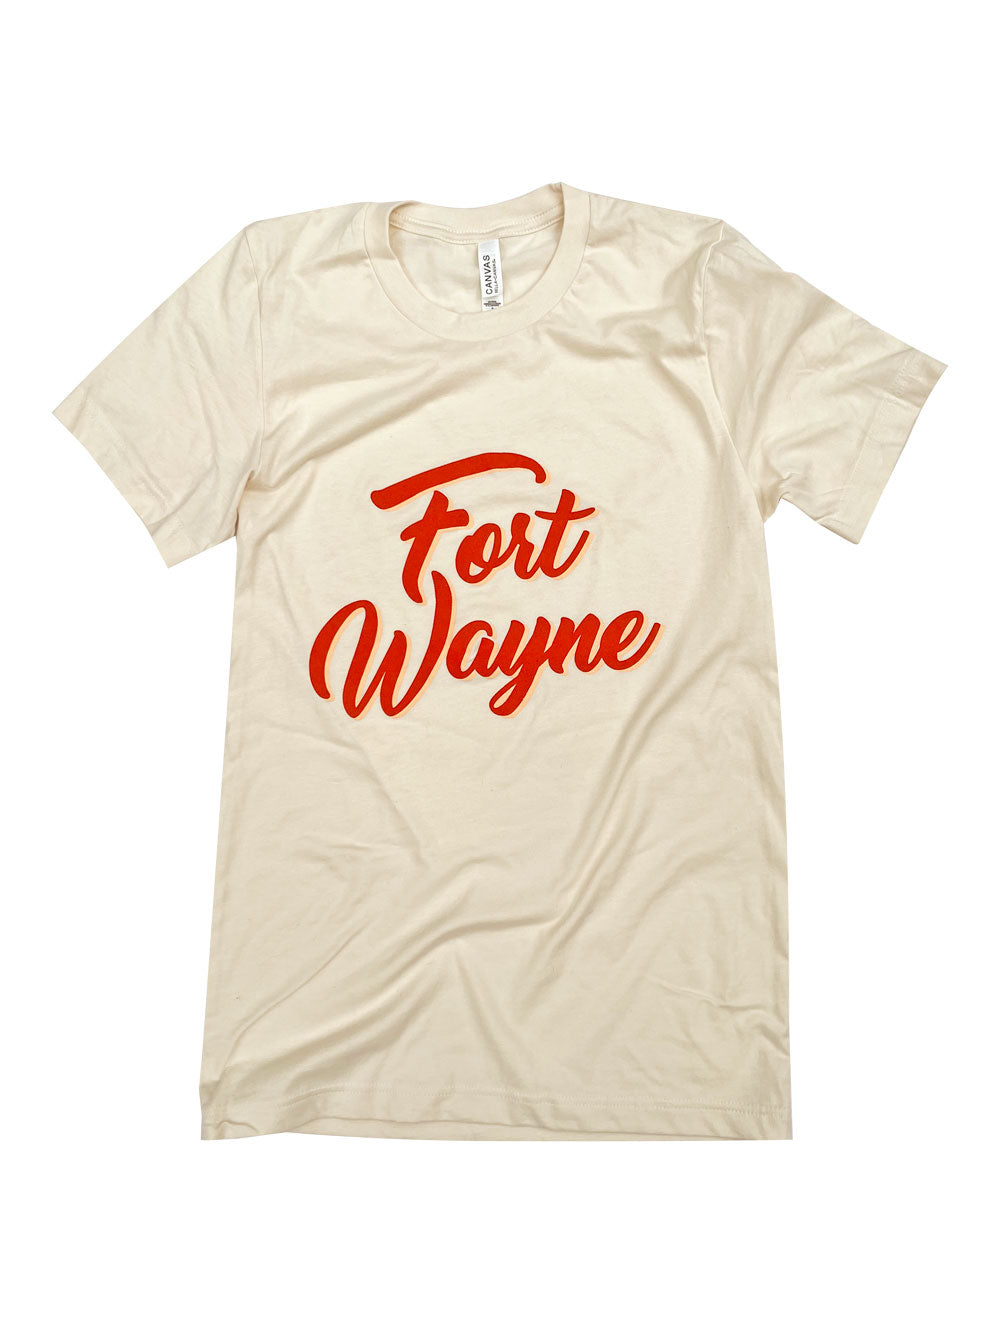 Signature Fort Wayne